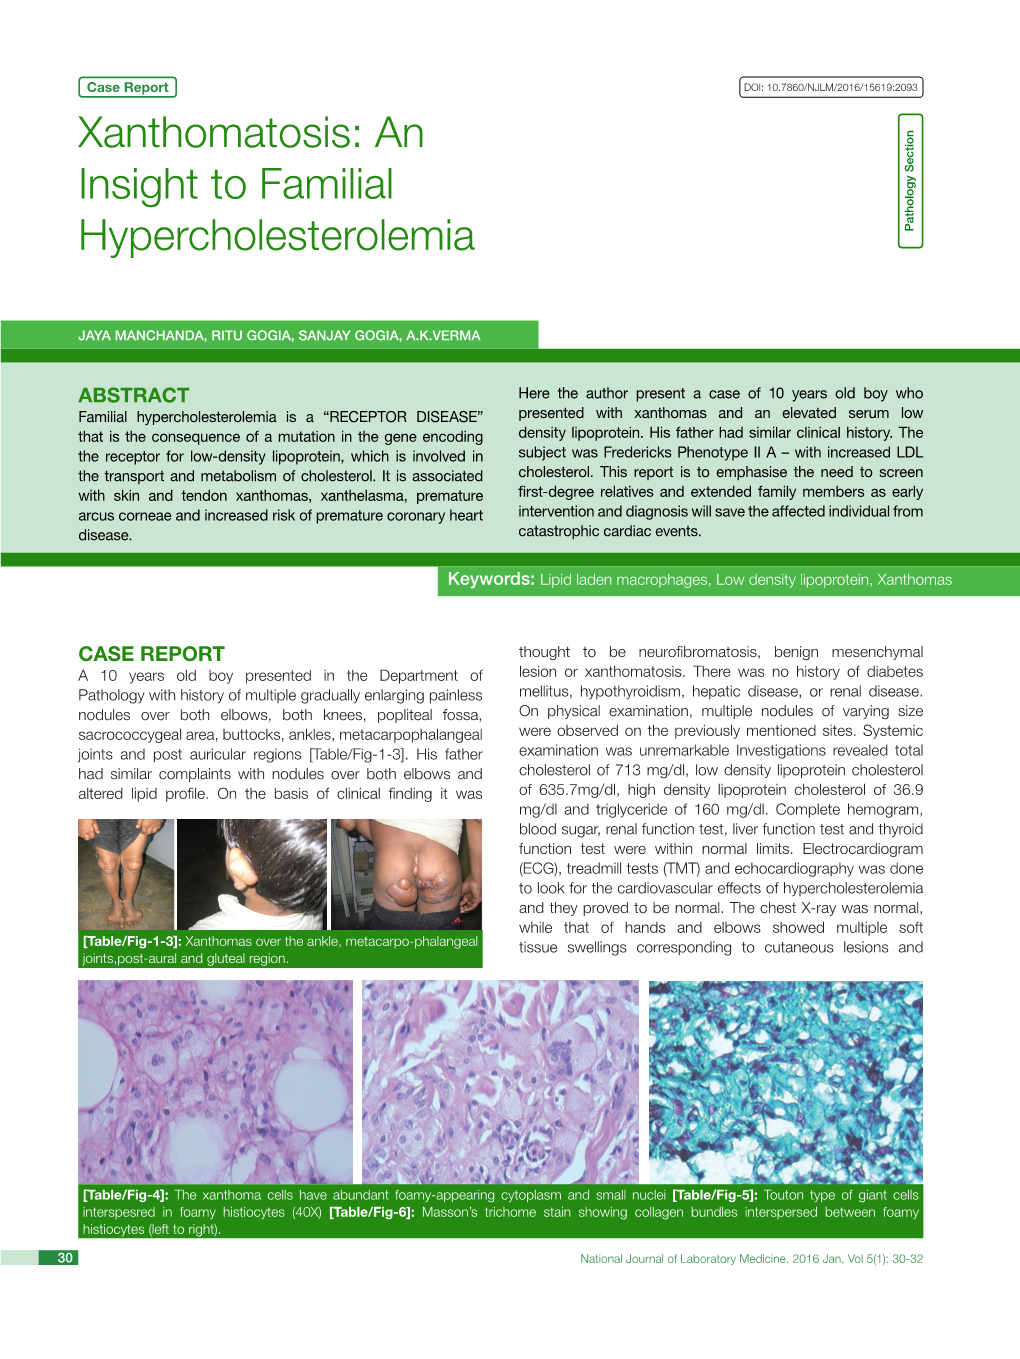 Xanthomatosis: an Insight to Familial Hypercholesterolemia Pathology Section